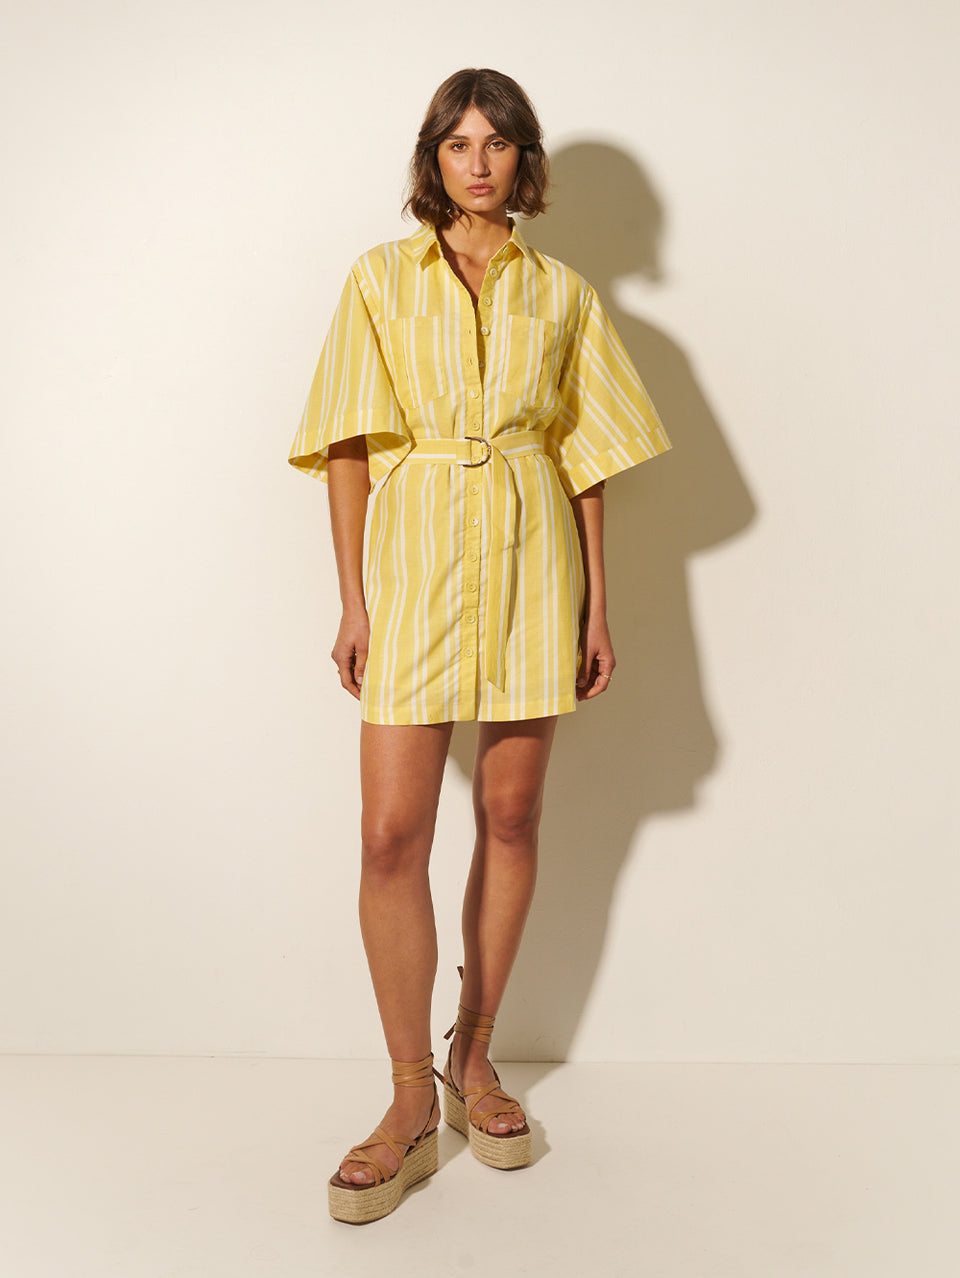 Lola Shirt Dress KIVARI | Model wears yellow and white striped shirt dress